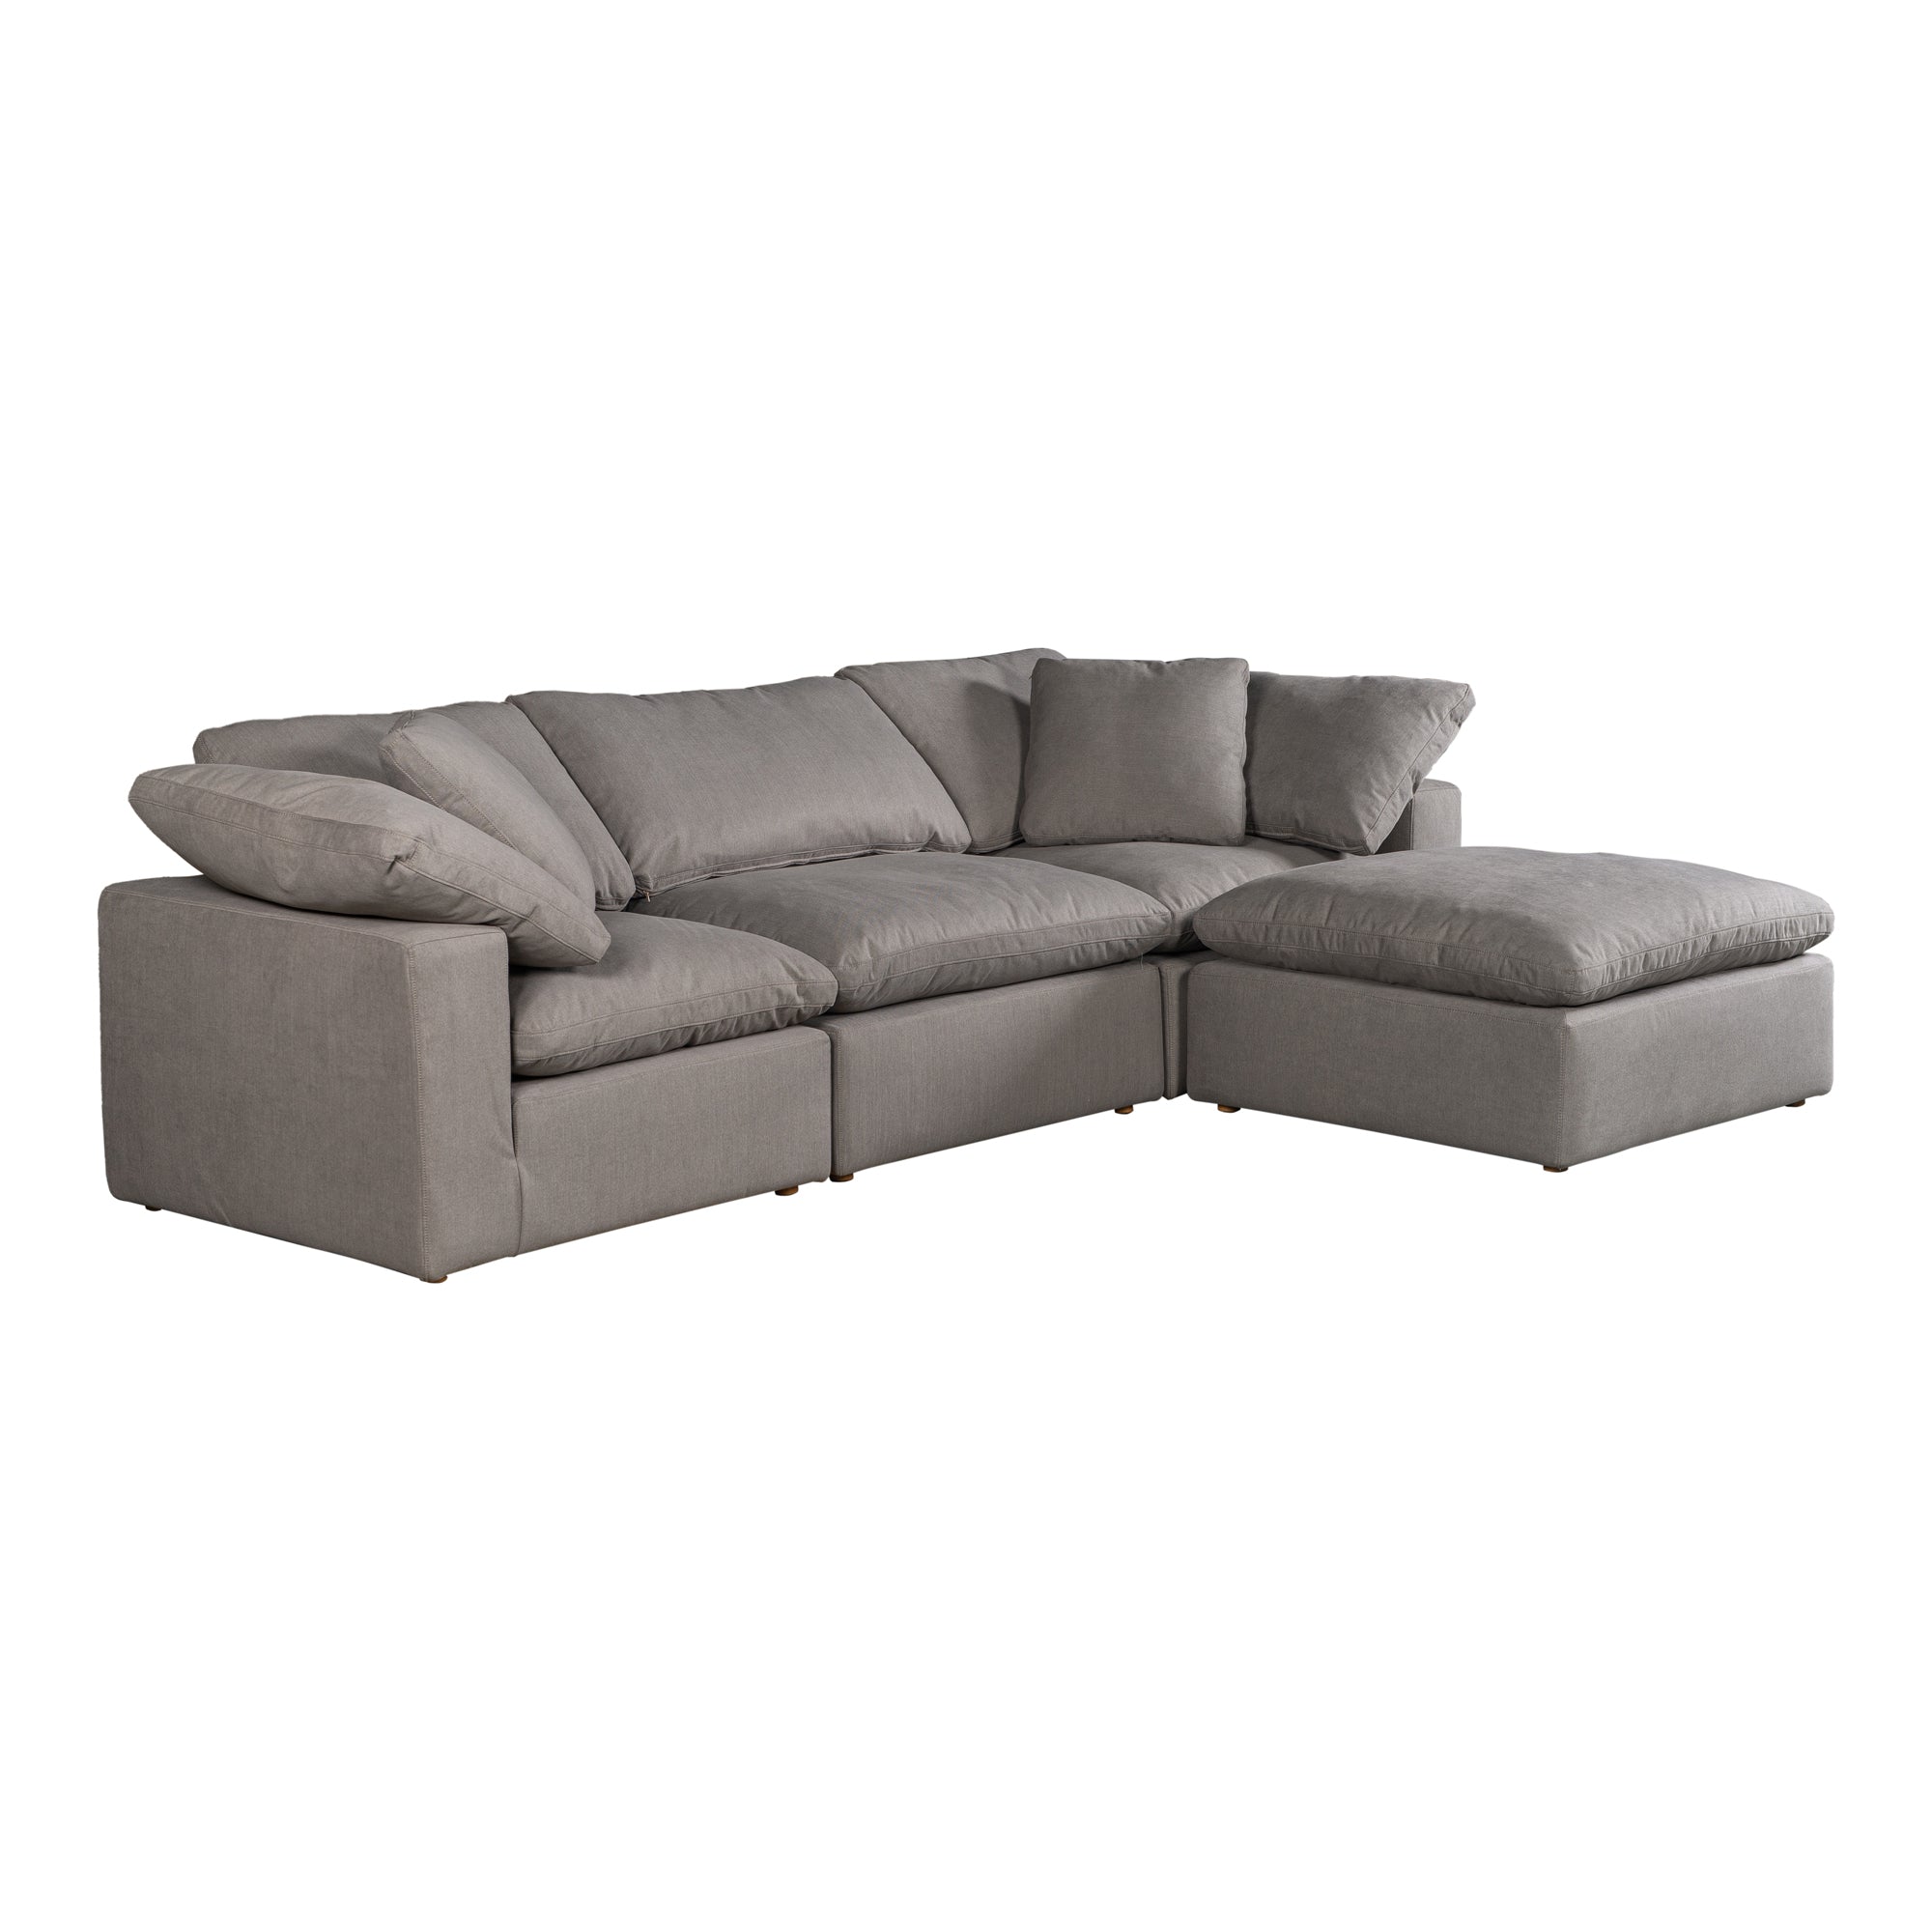 Terra Condo Lounge Modular Sectional Livesmart Fabric - White - - Furniture - Tipplergoods